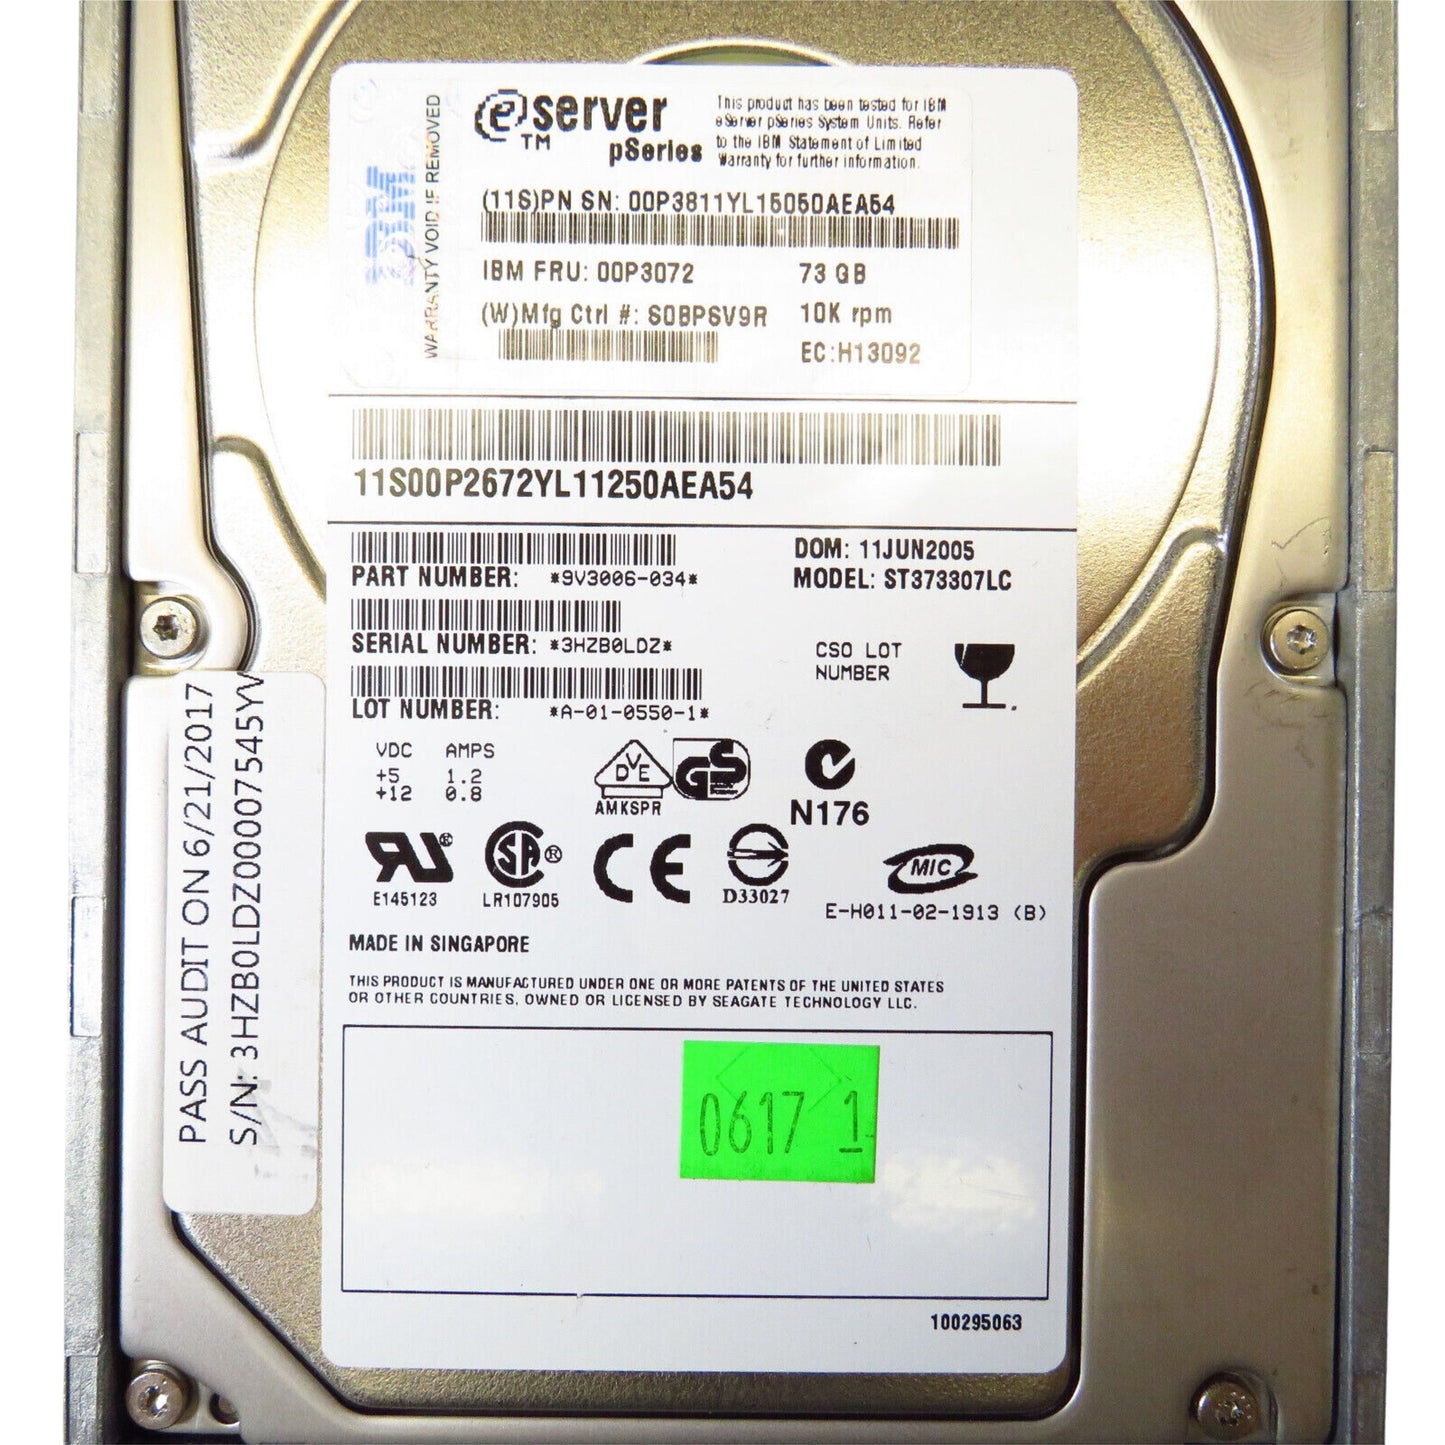 IBM 00P3072 3.5" 73GB 15000RPM SCSI Hard Disk Drive (HDD), Silver (Refurbished)